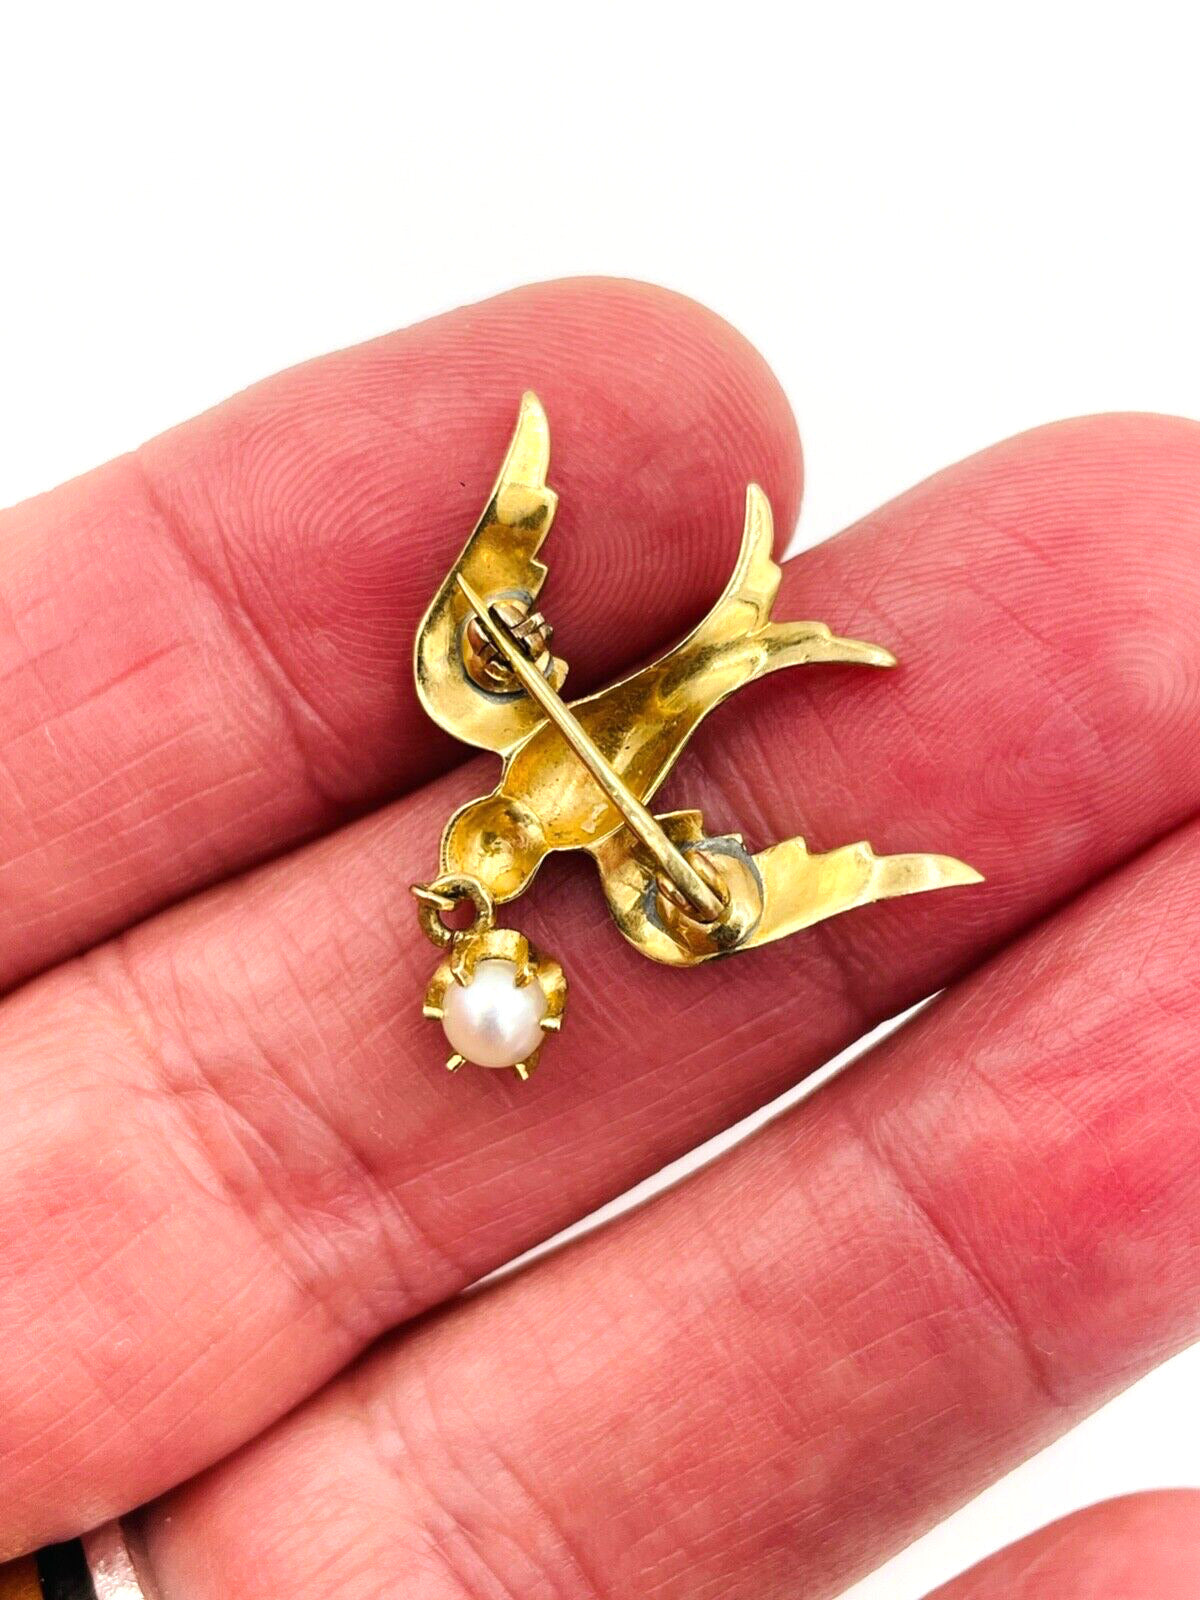 Exquisite Vintage 14K Gold enamel Flying Bird Brooch with Pearl Drop